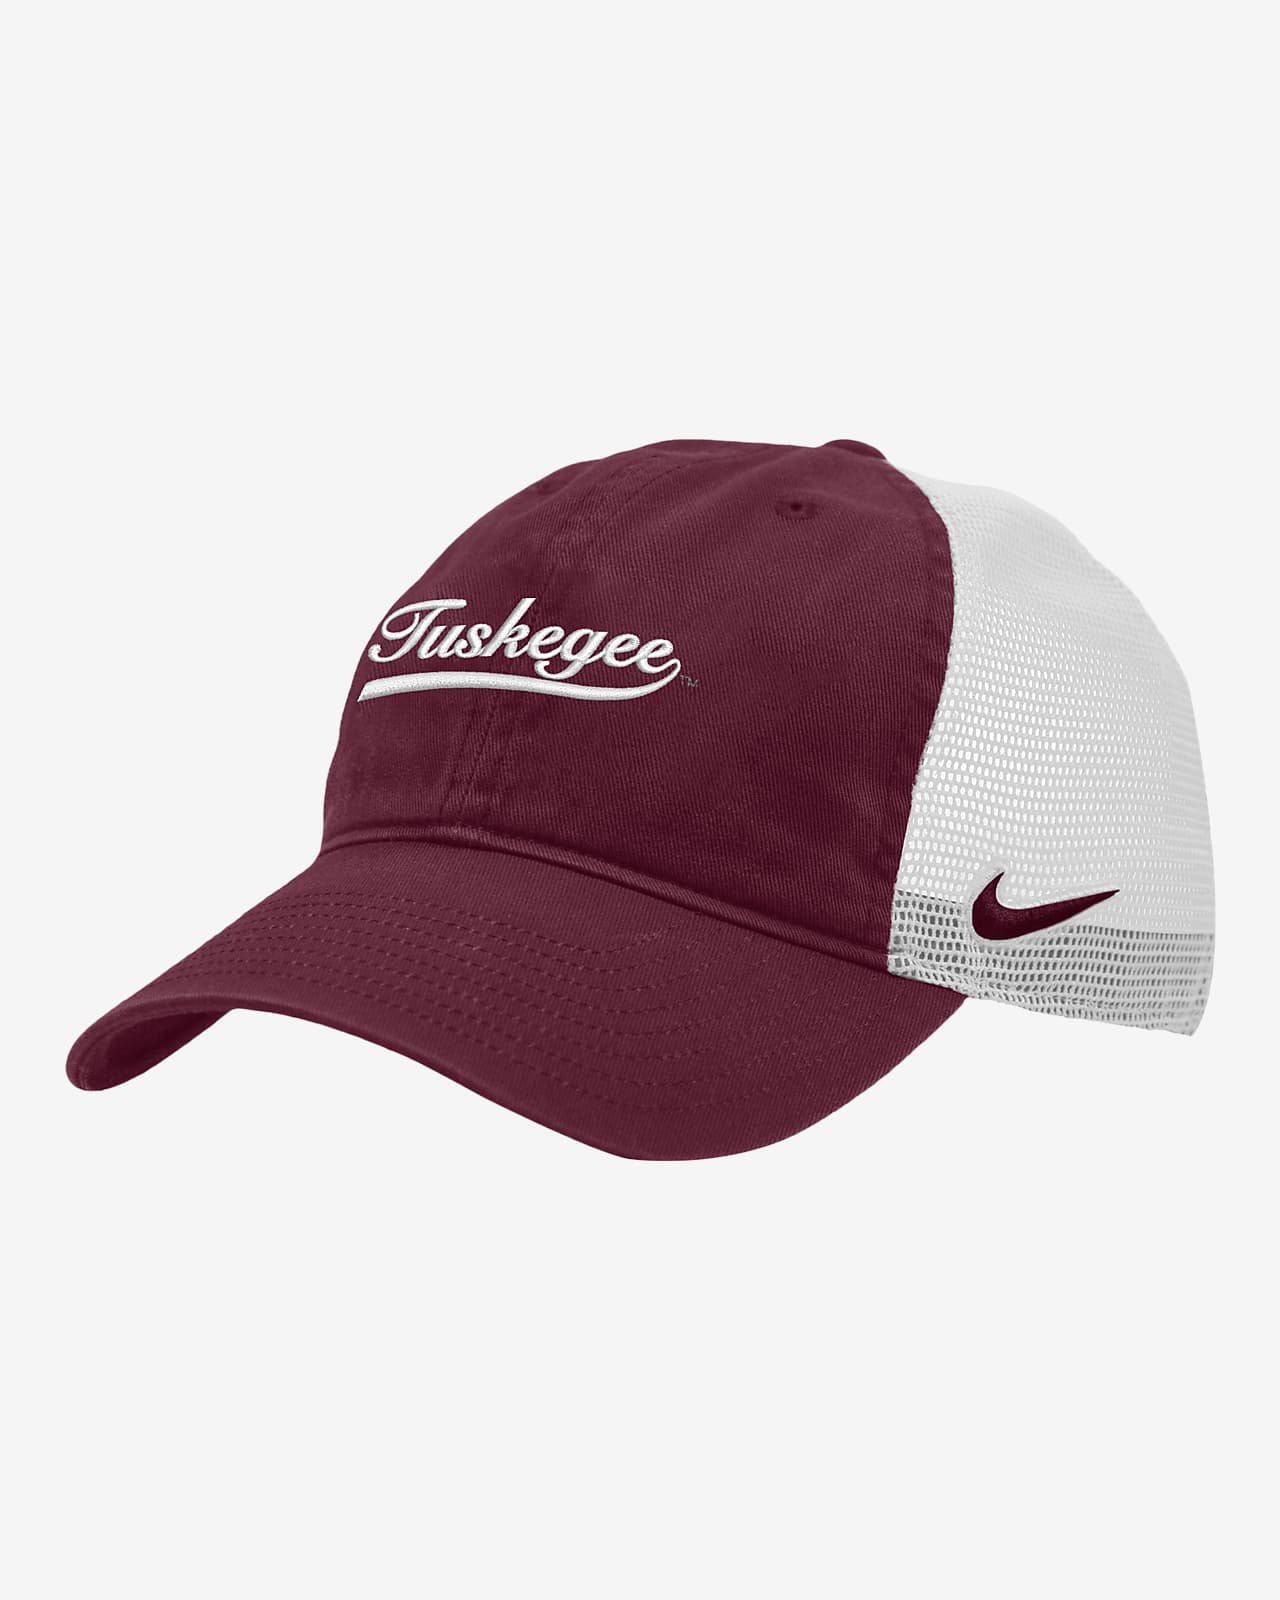 Tuskegee Heritage86 Nike College Trucker Hat